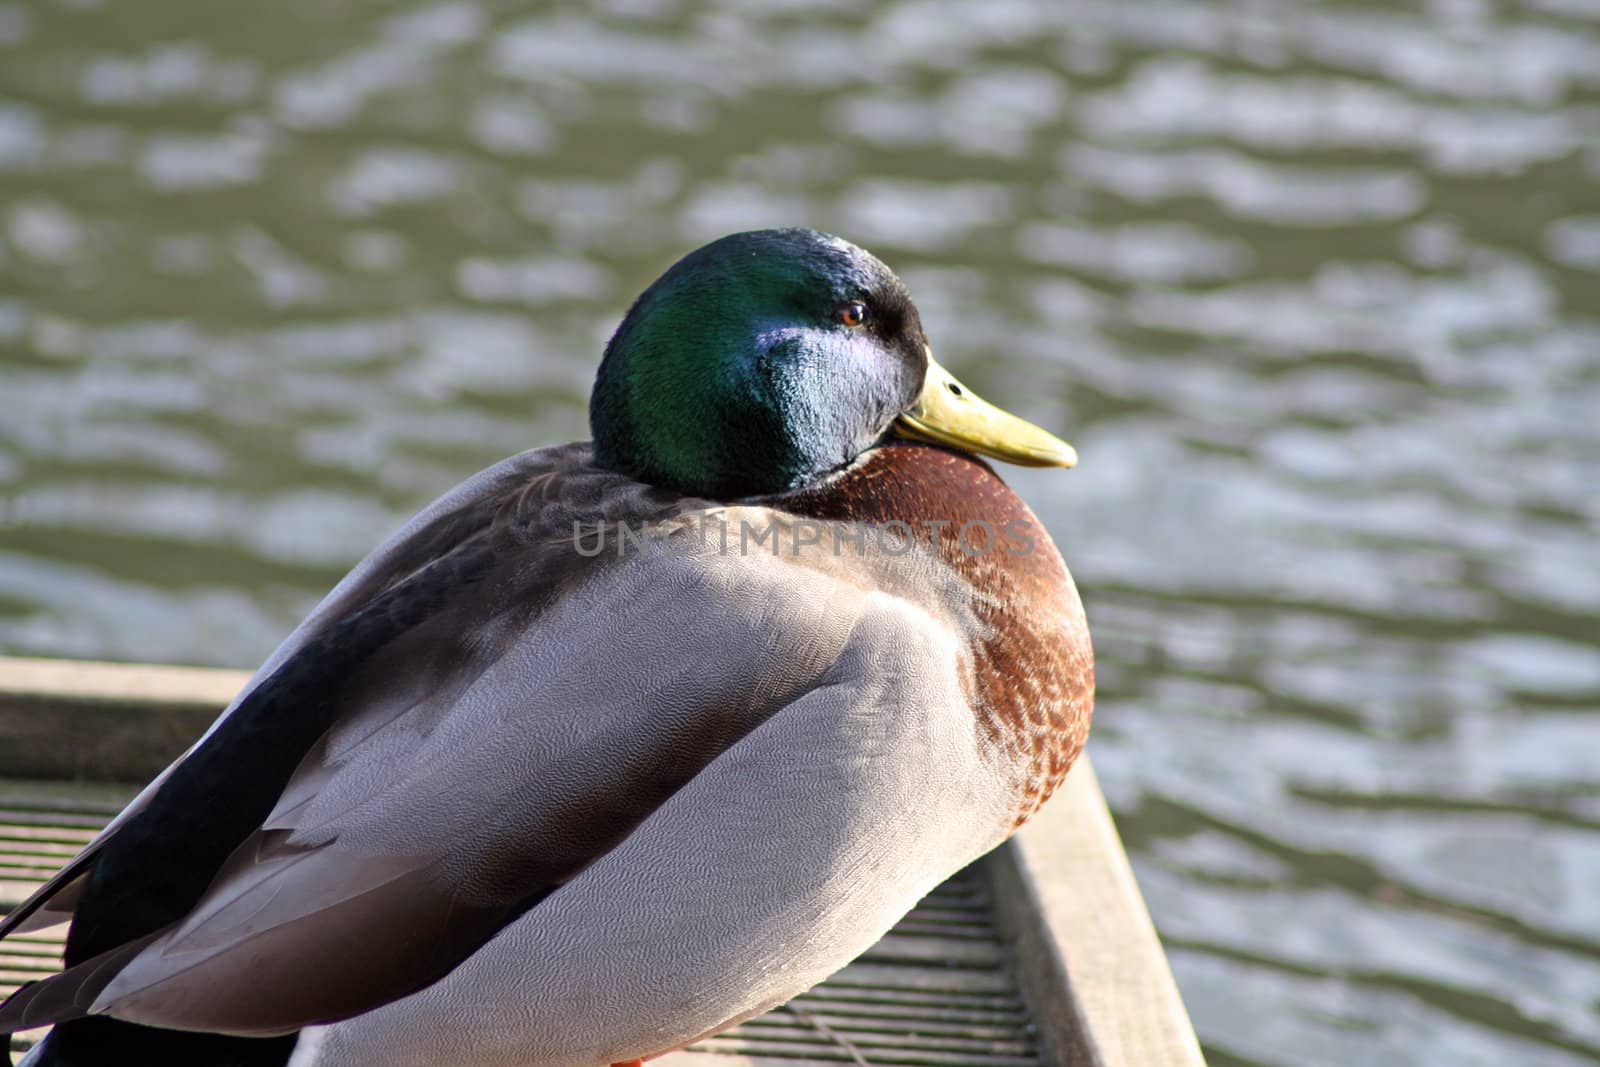 a duck sat on decking